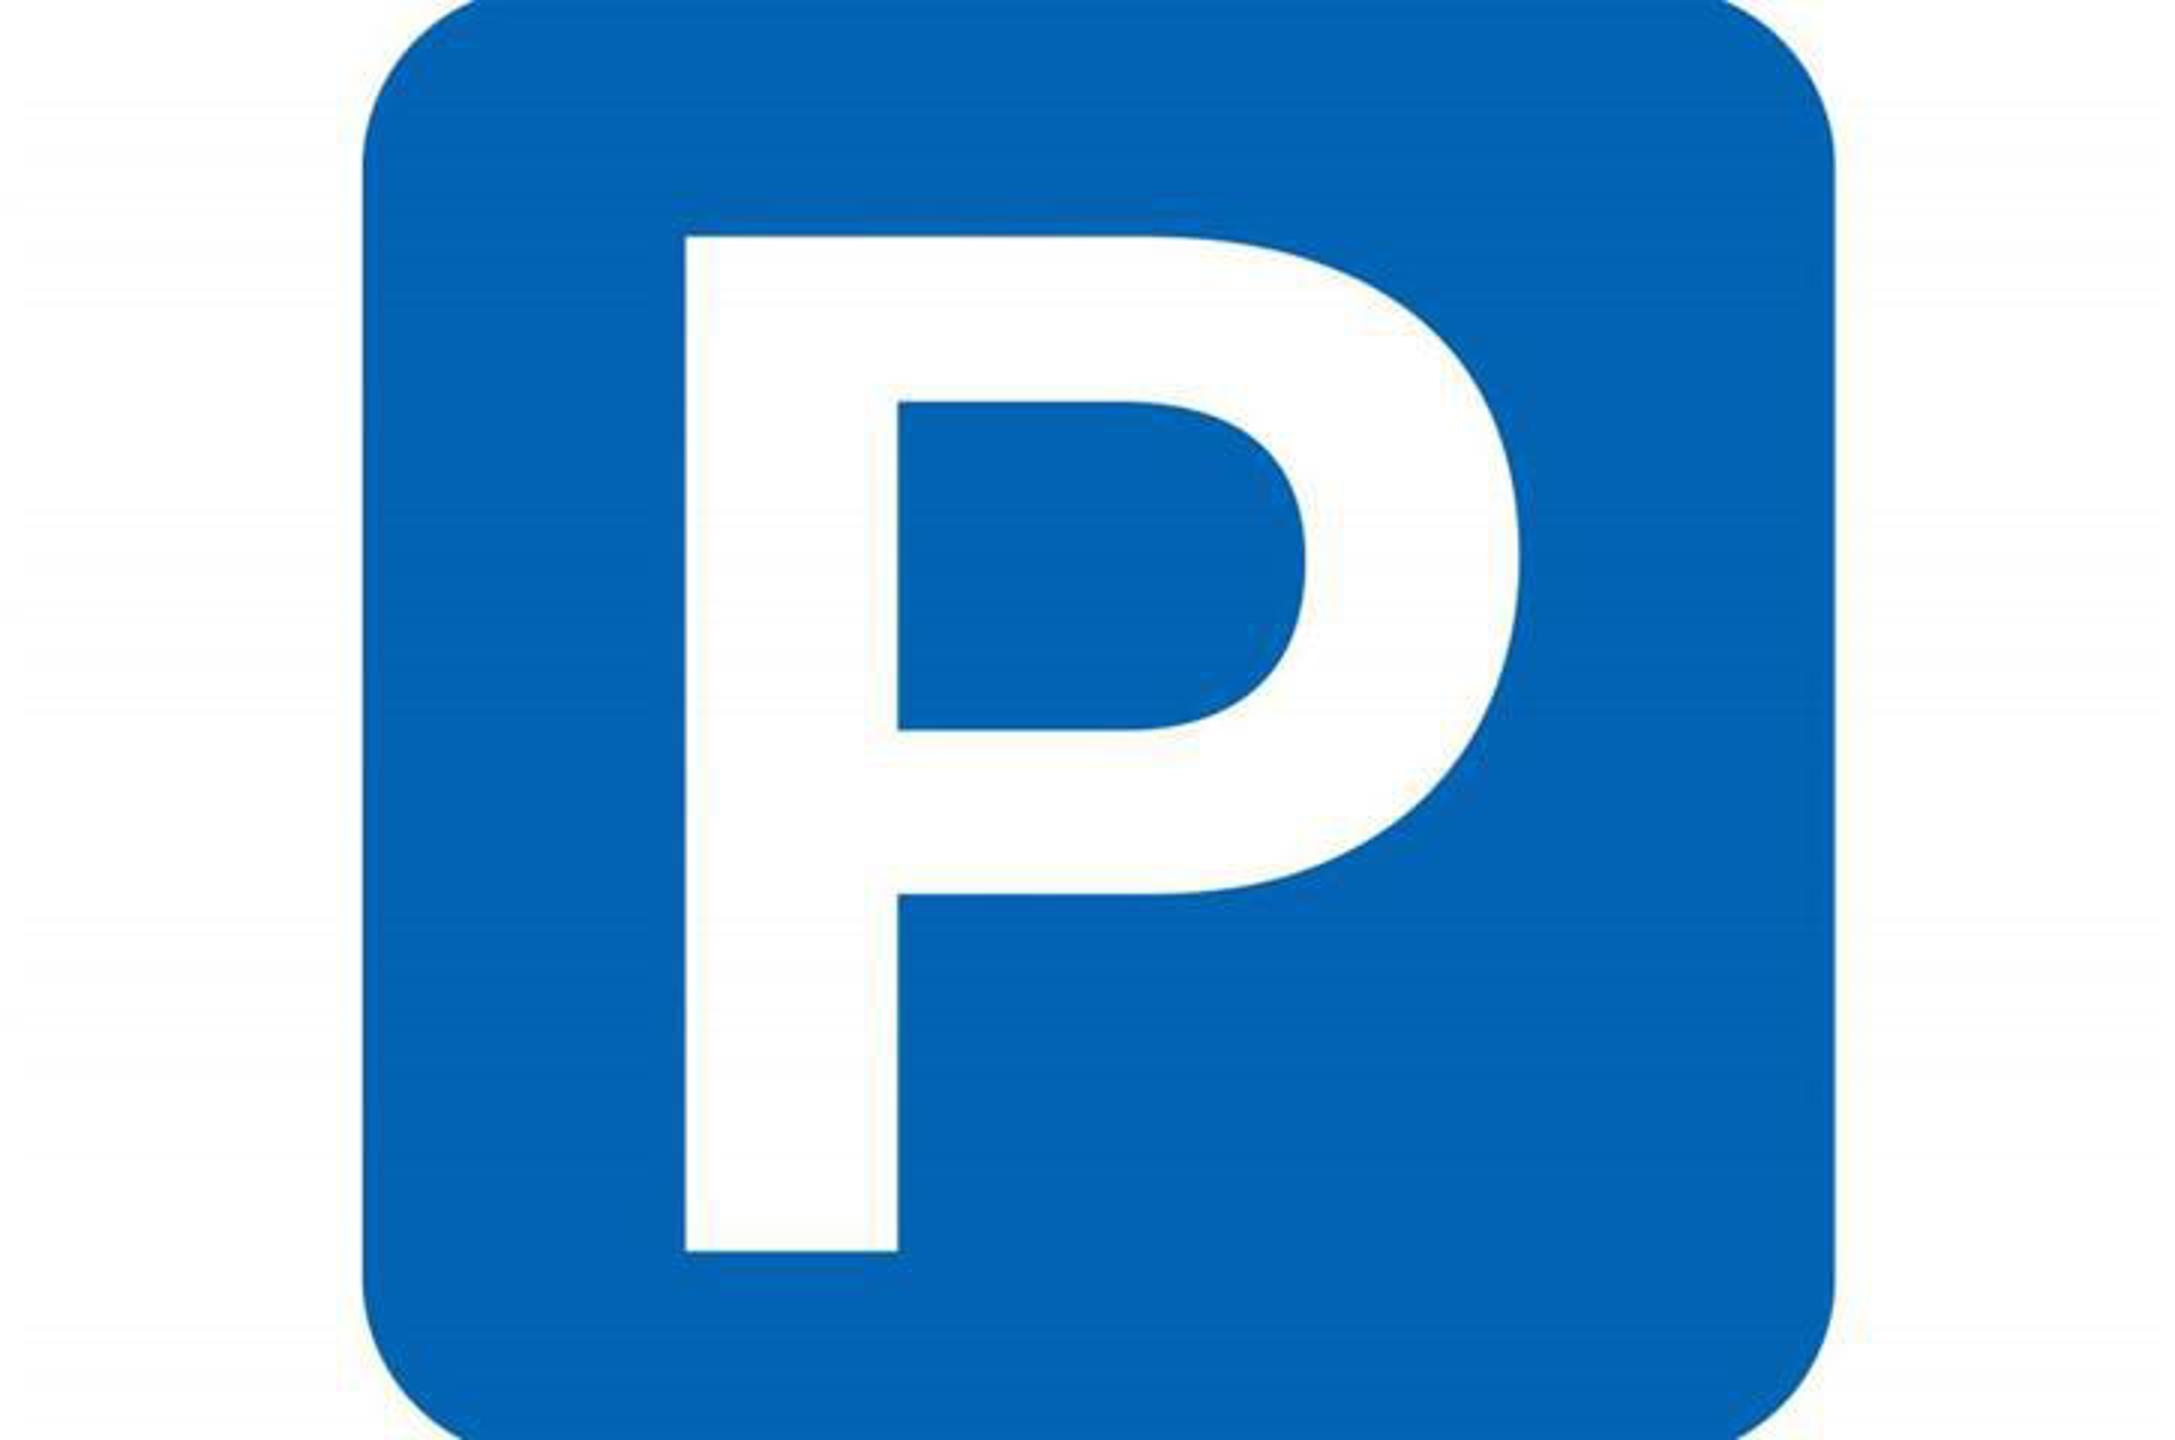 Parking & garage te  huur in Sint-Pieters-Woluwe 1150 150.00€  slaapkamers 16.00m² - Zoekertje 1353893